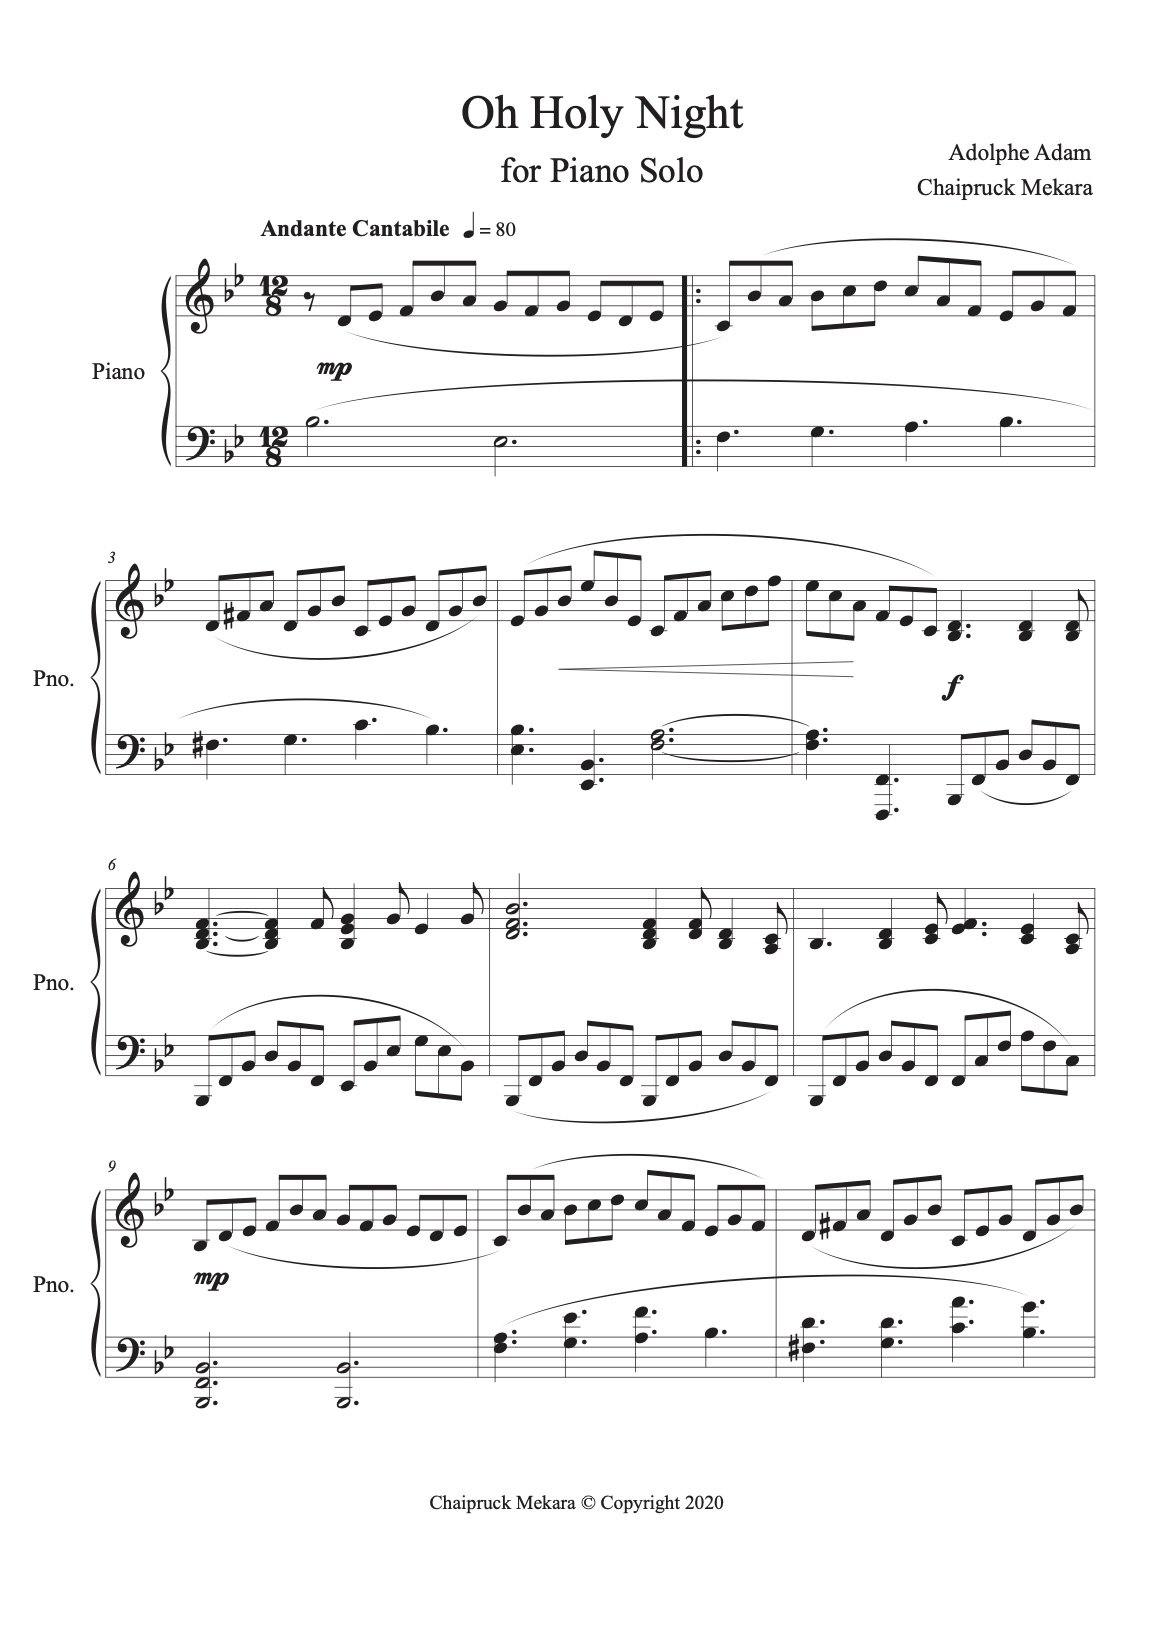 Oh Holy Night Piano Solo - ChaipruckMekara